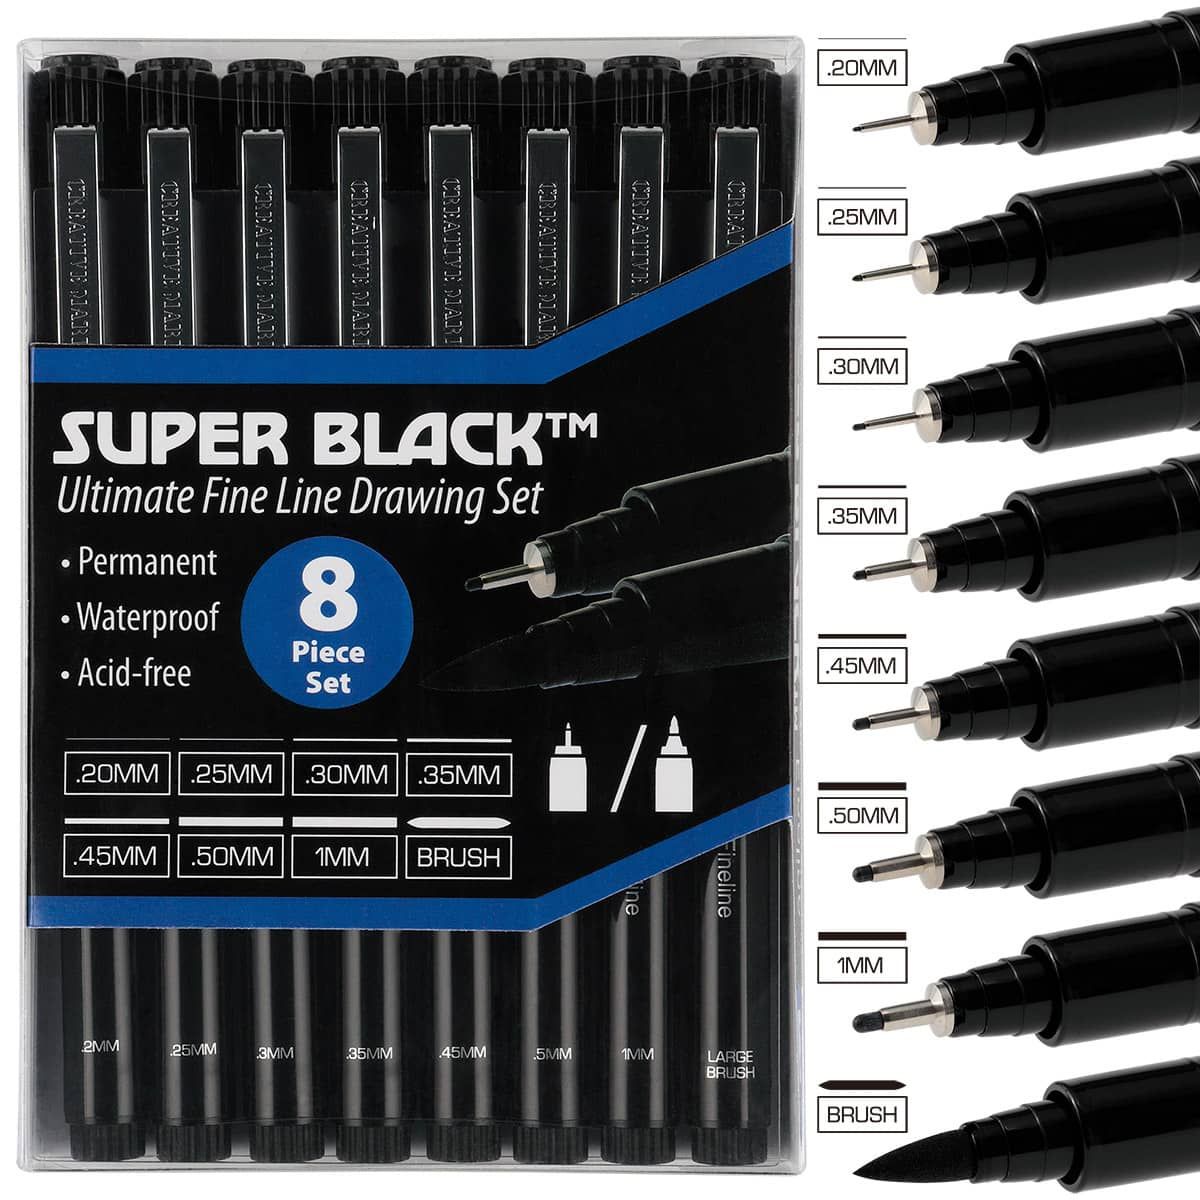 Super Black Permanent Fineliners Ultimate Fine Line Drawing Set of 8